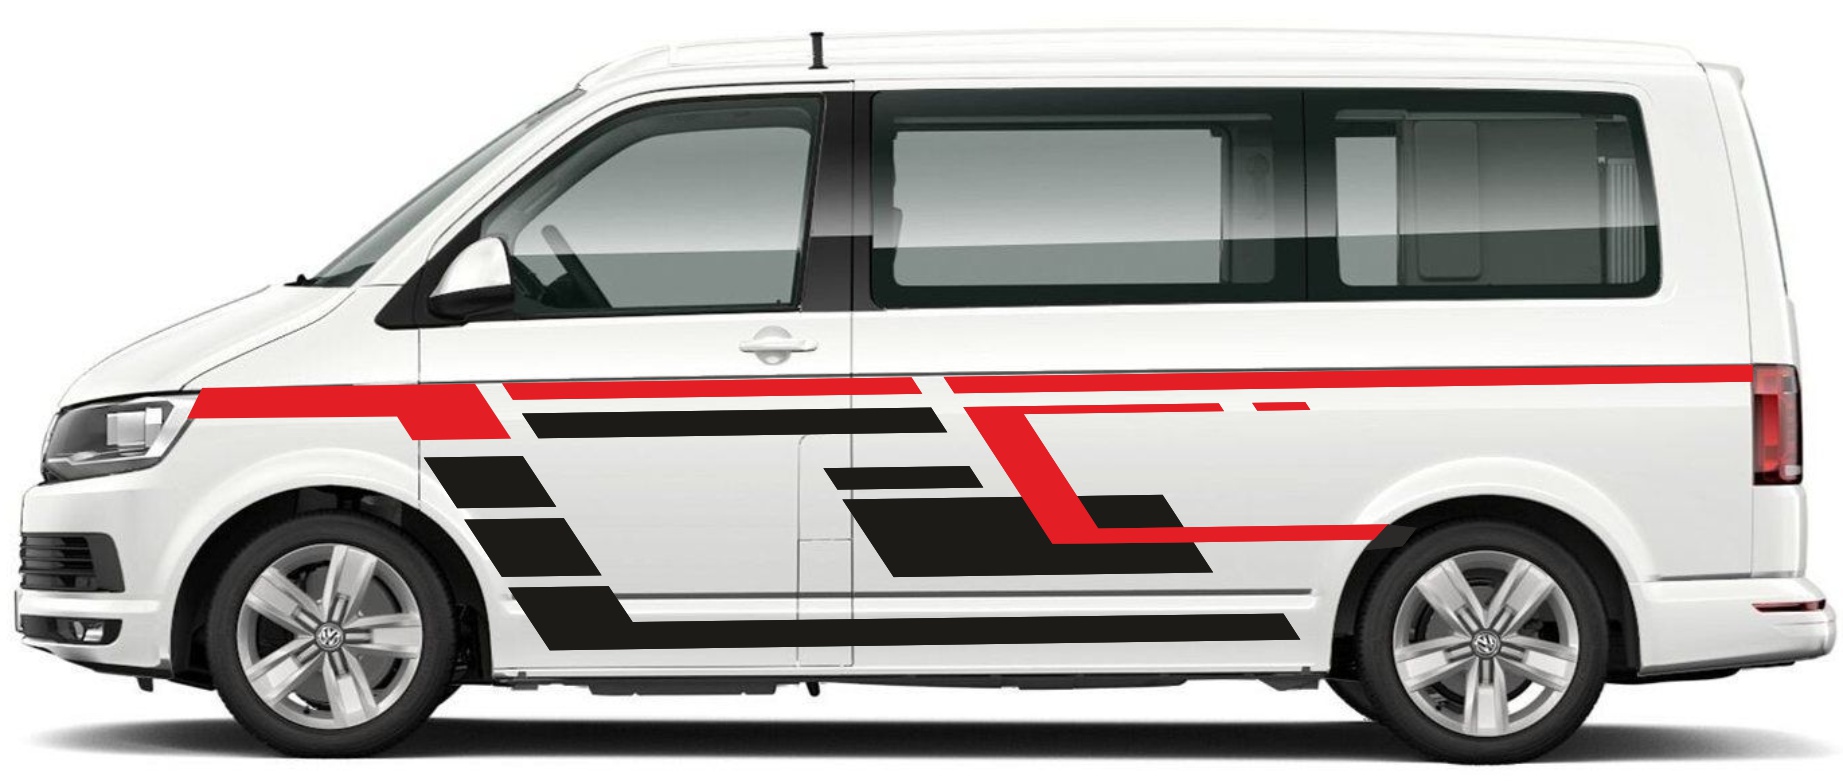 naklejki VW T6 tunning edition